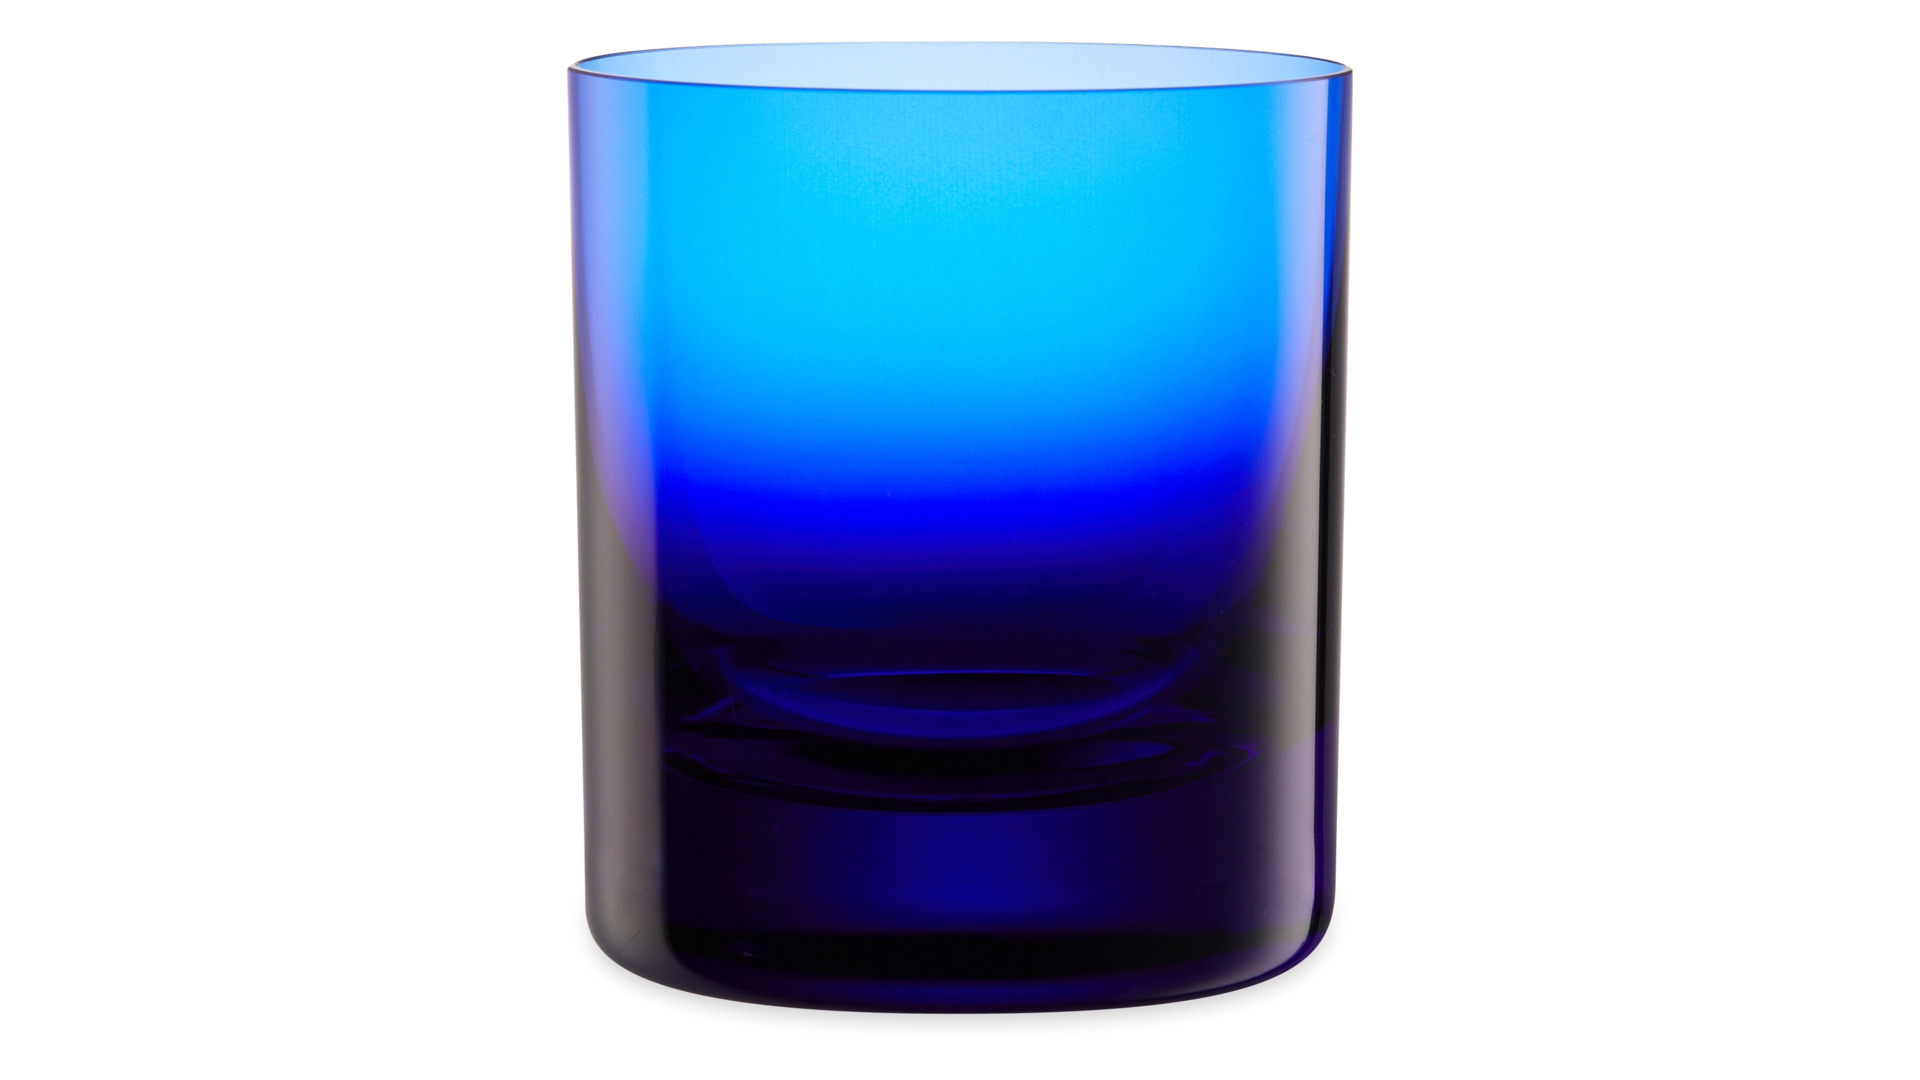 Набор стаканов для виски Moser Виски сет 370 мл, 2 шт, темно-синий, п/к